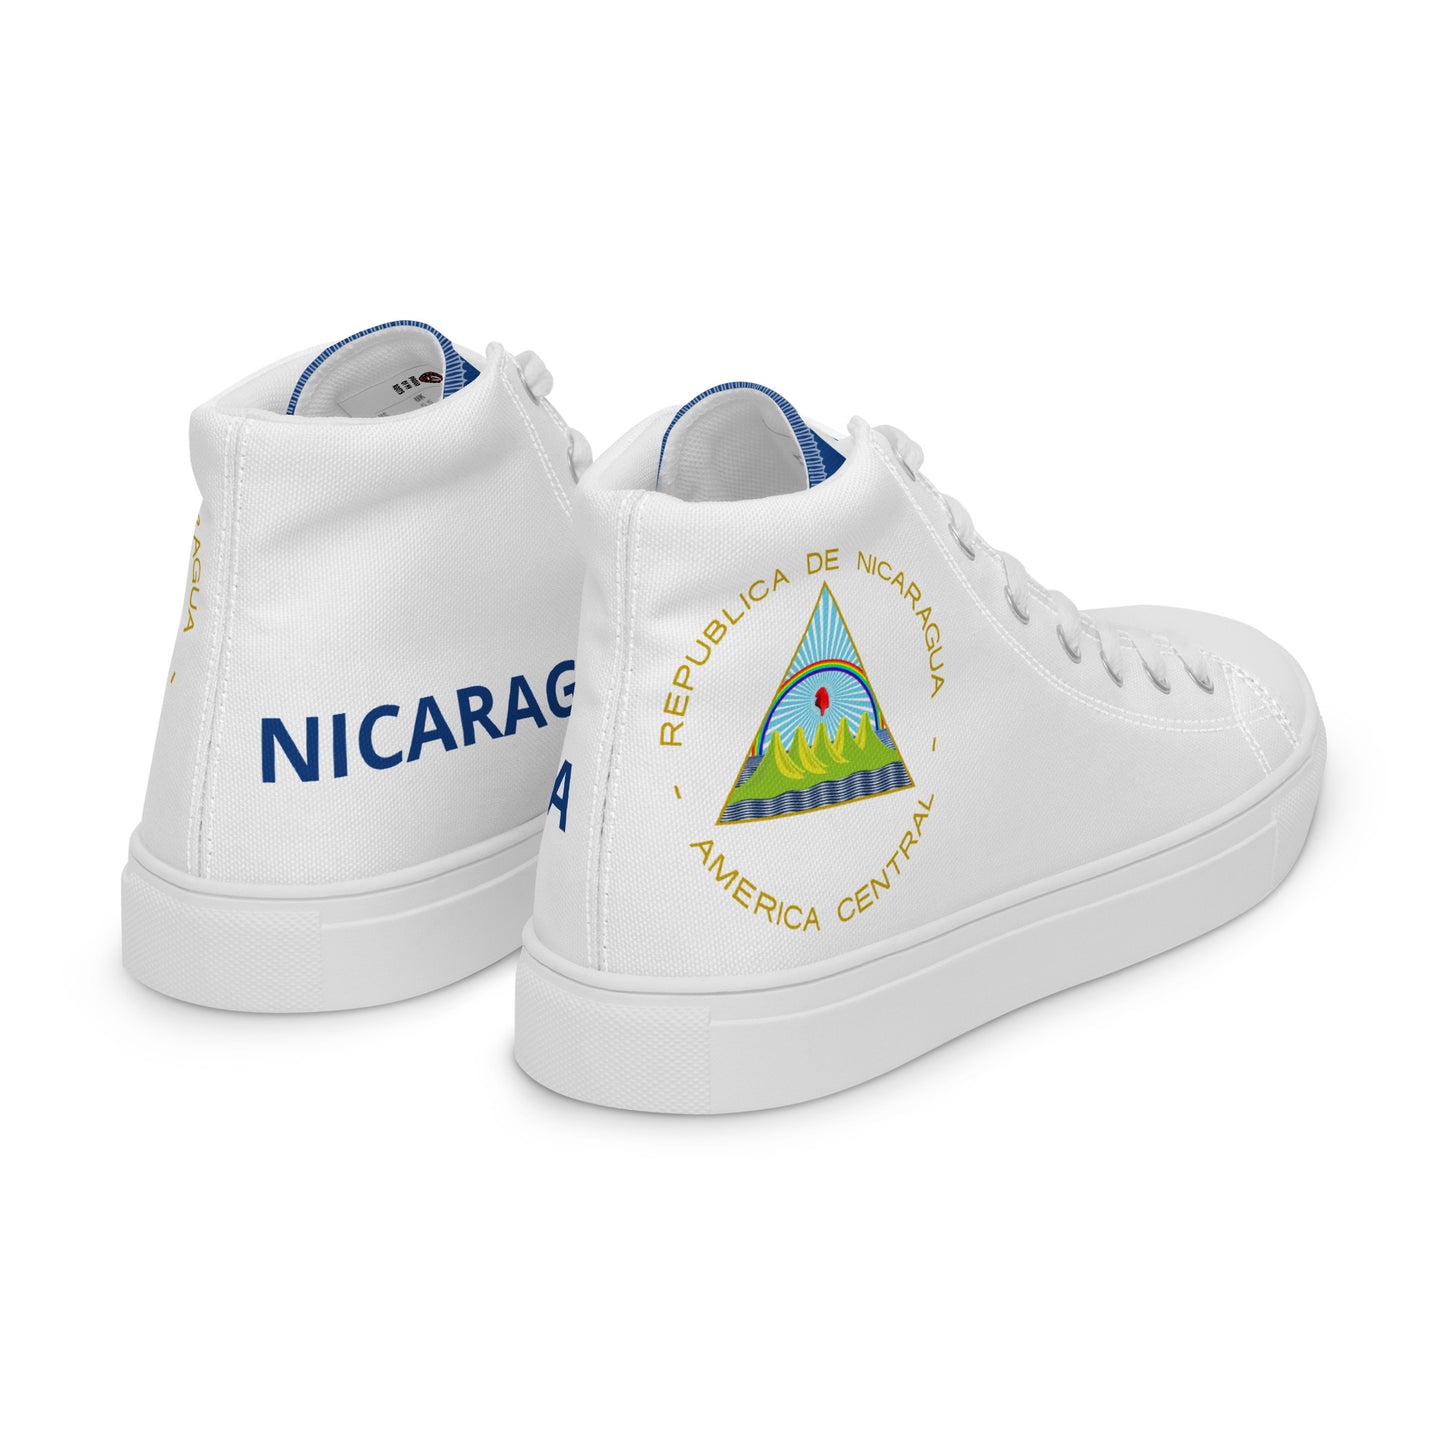 Nicaragua - Men - White - High top shoes